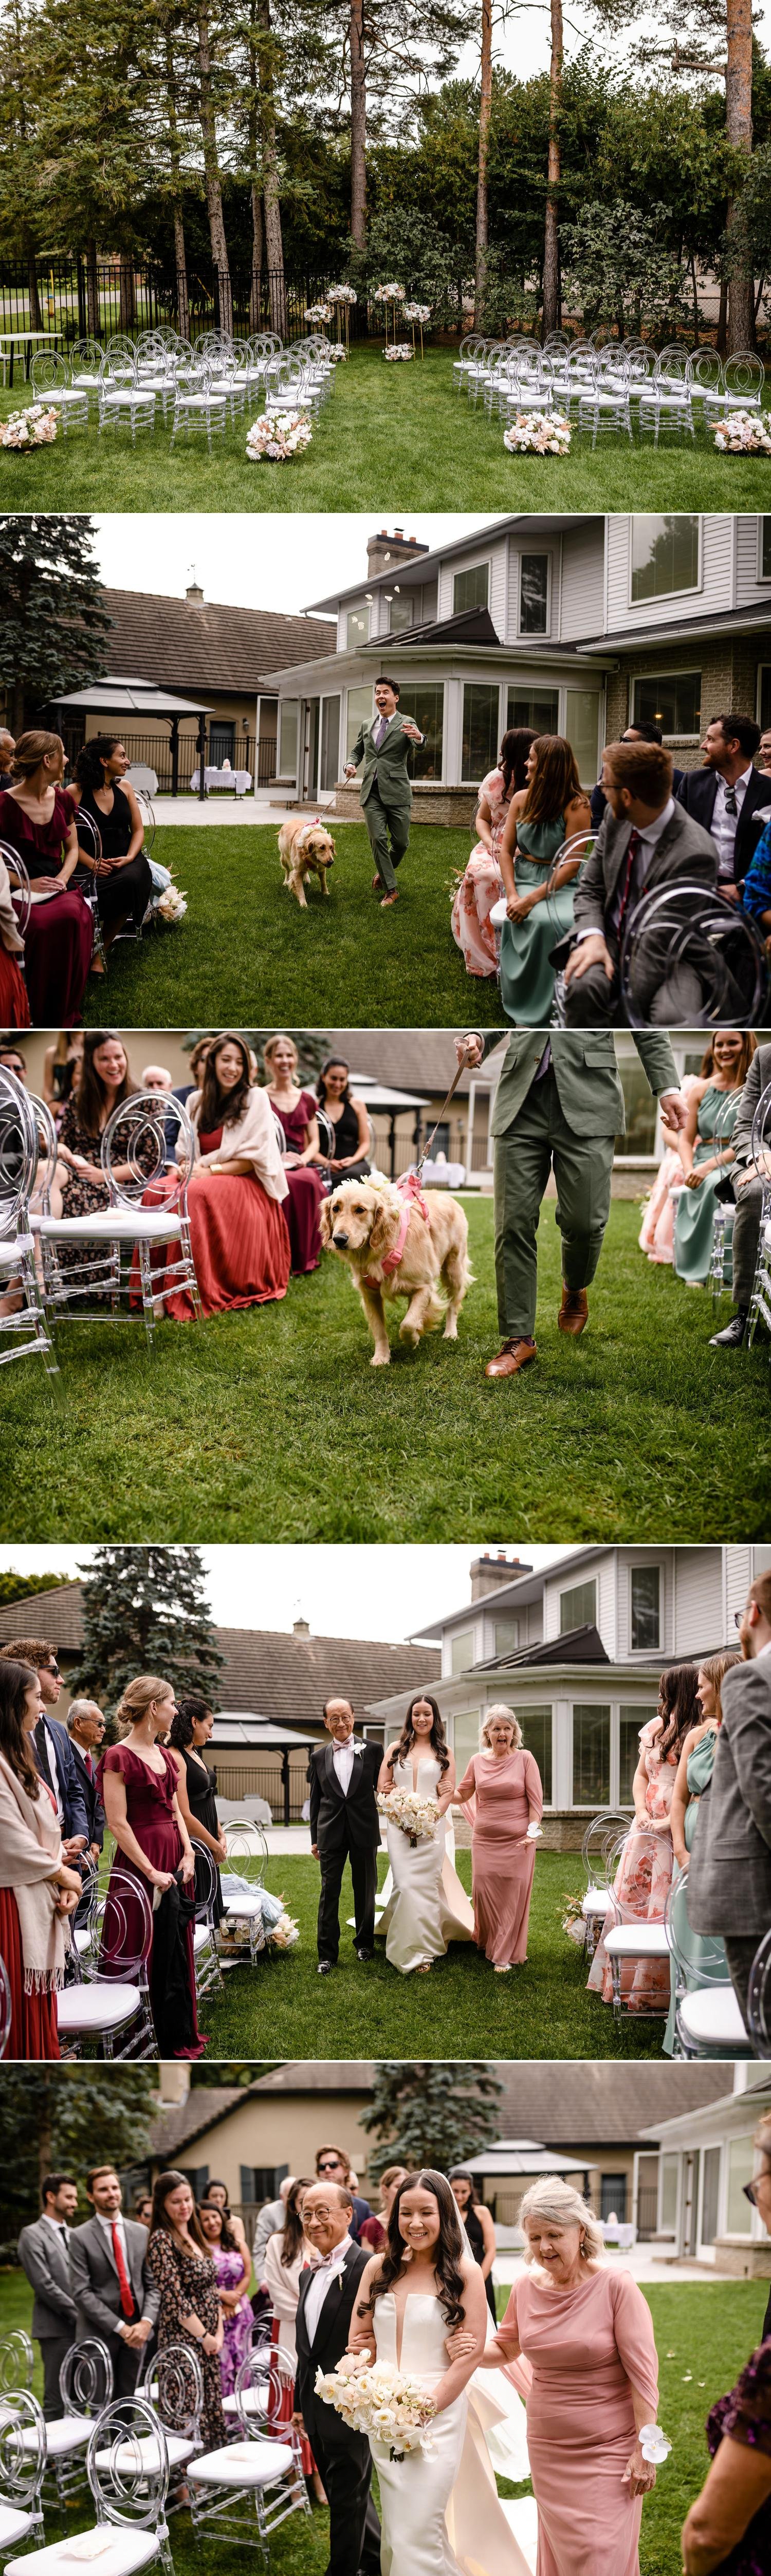 photographs from a backyard wedding ceremony in ottawa